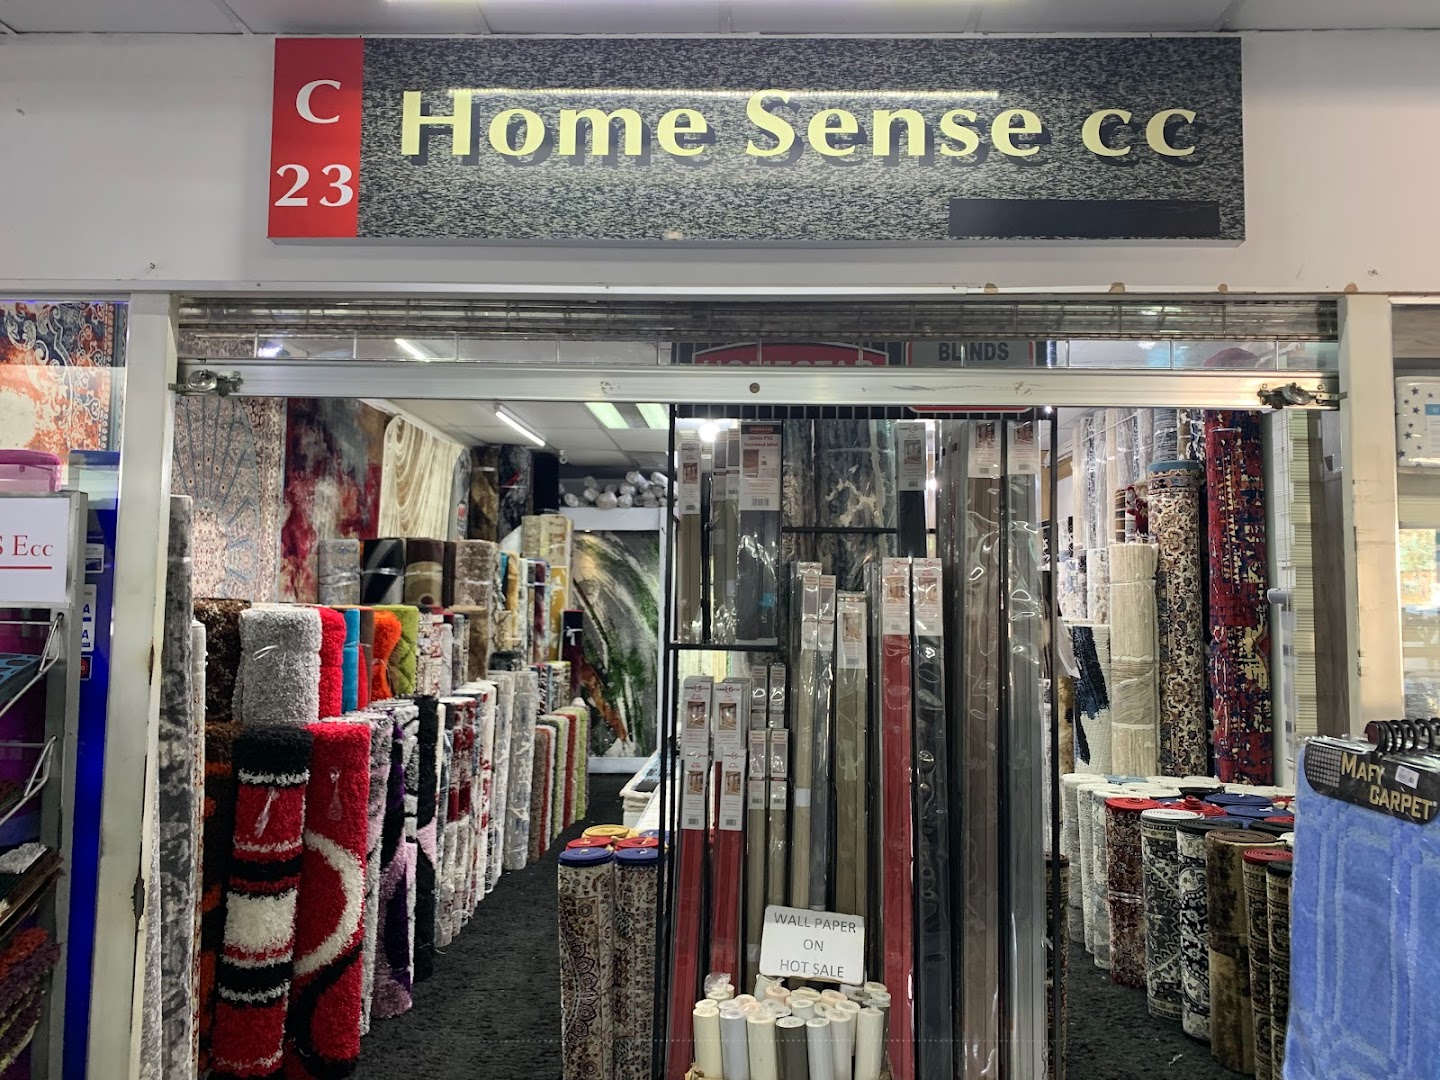 Home Sense CC